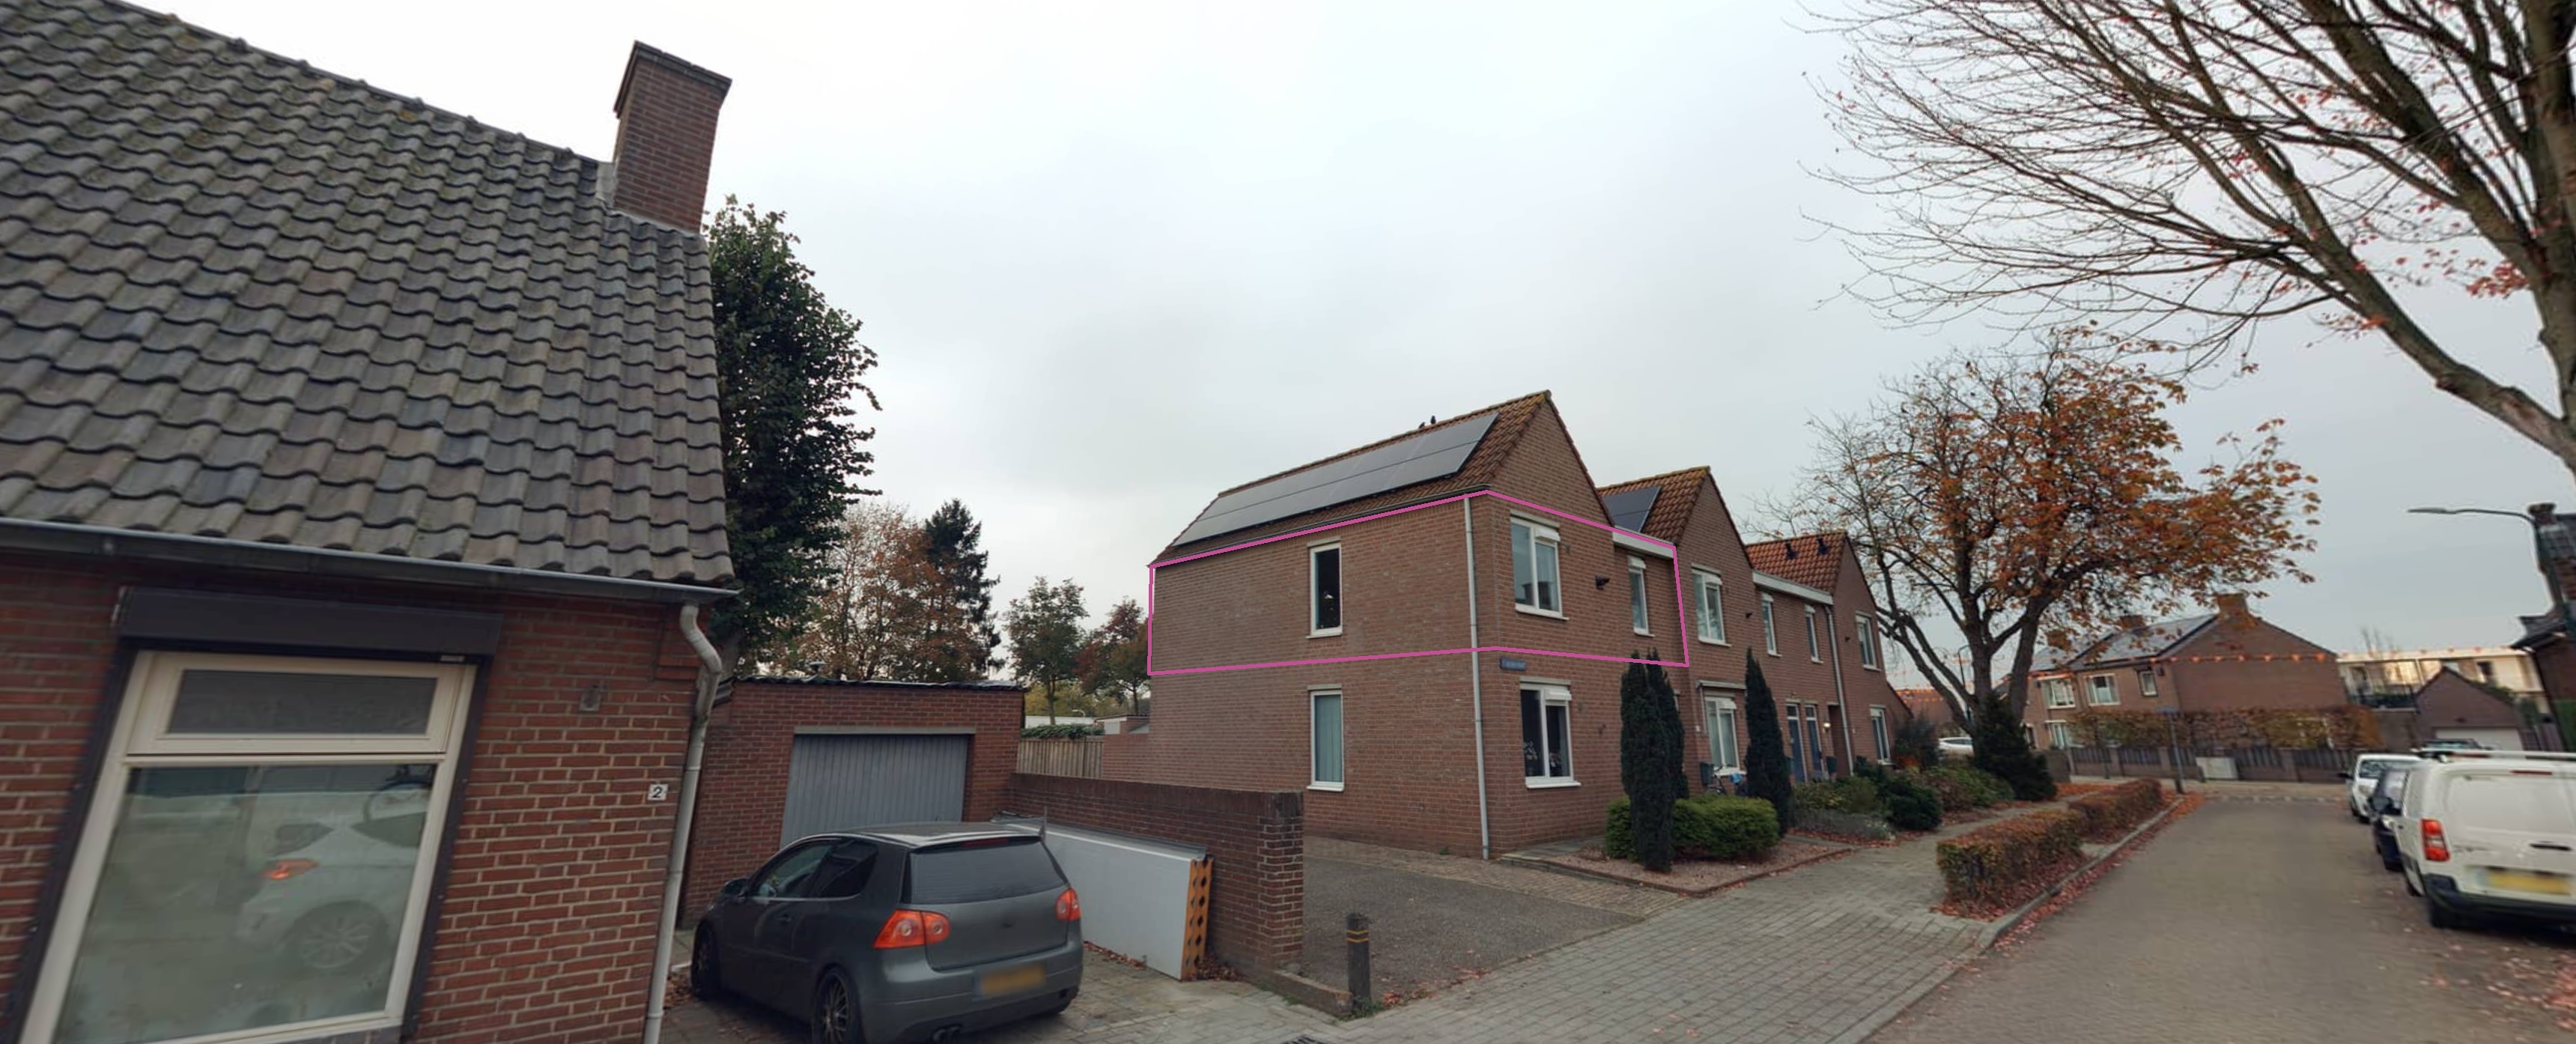 Clevershof 42, 5451 BV Mill, Nederland